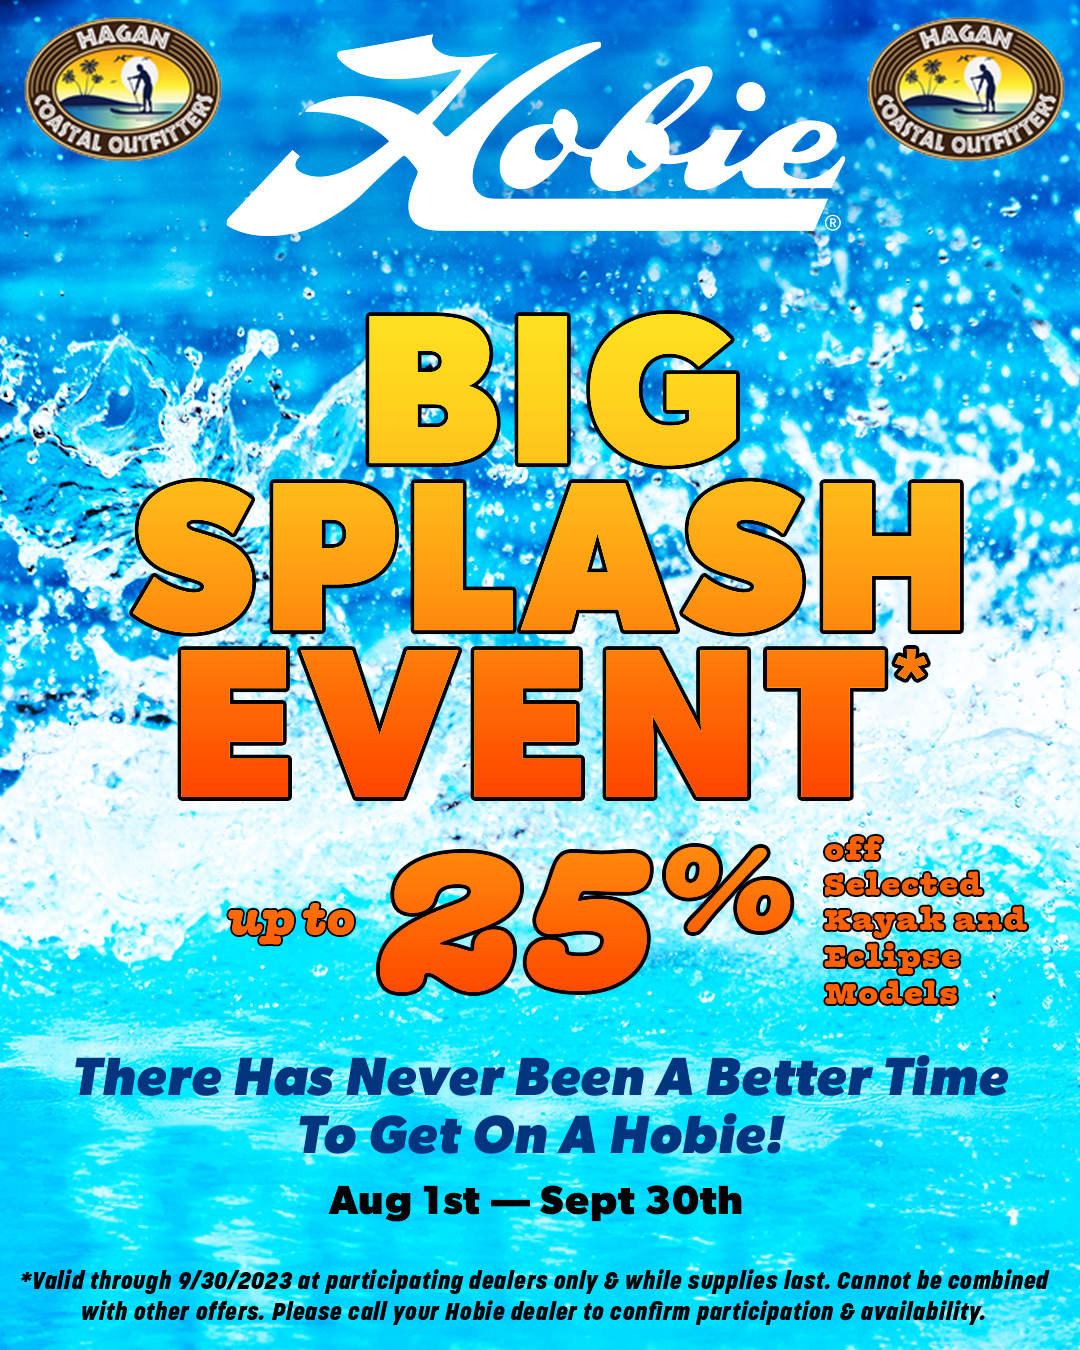 Big Splash Event at Hagan Coastal Outfitters